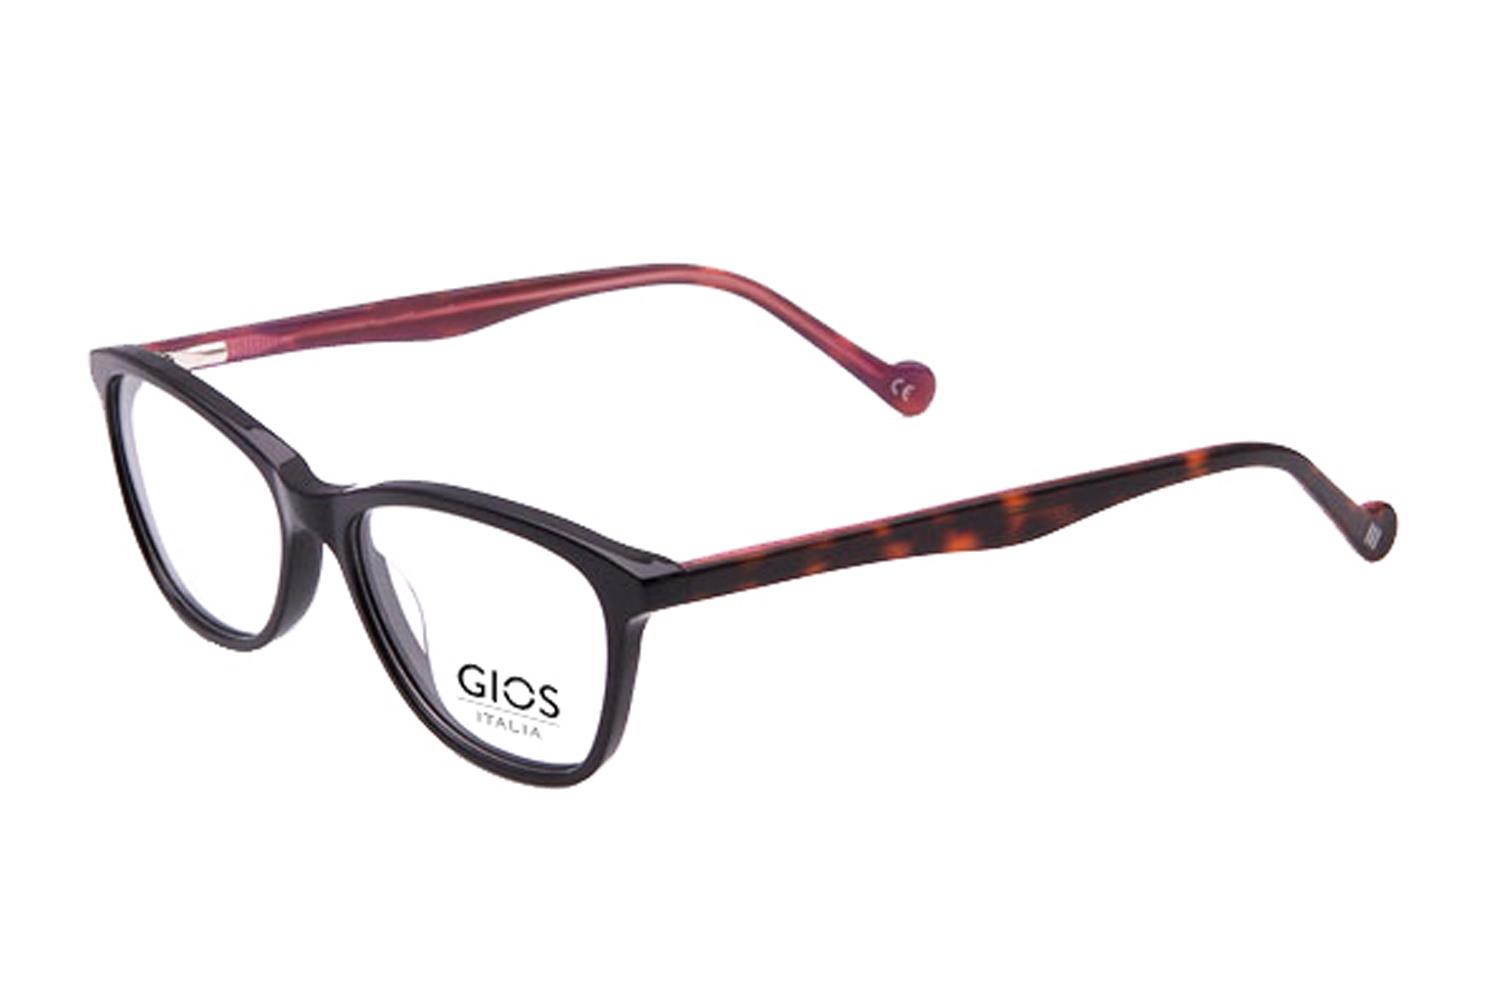 Picture of Gios Italia Eyeglasses RF500066